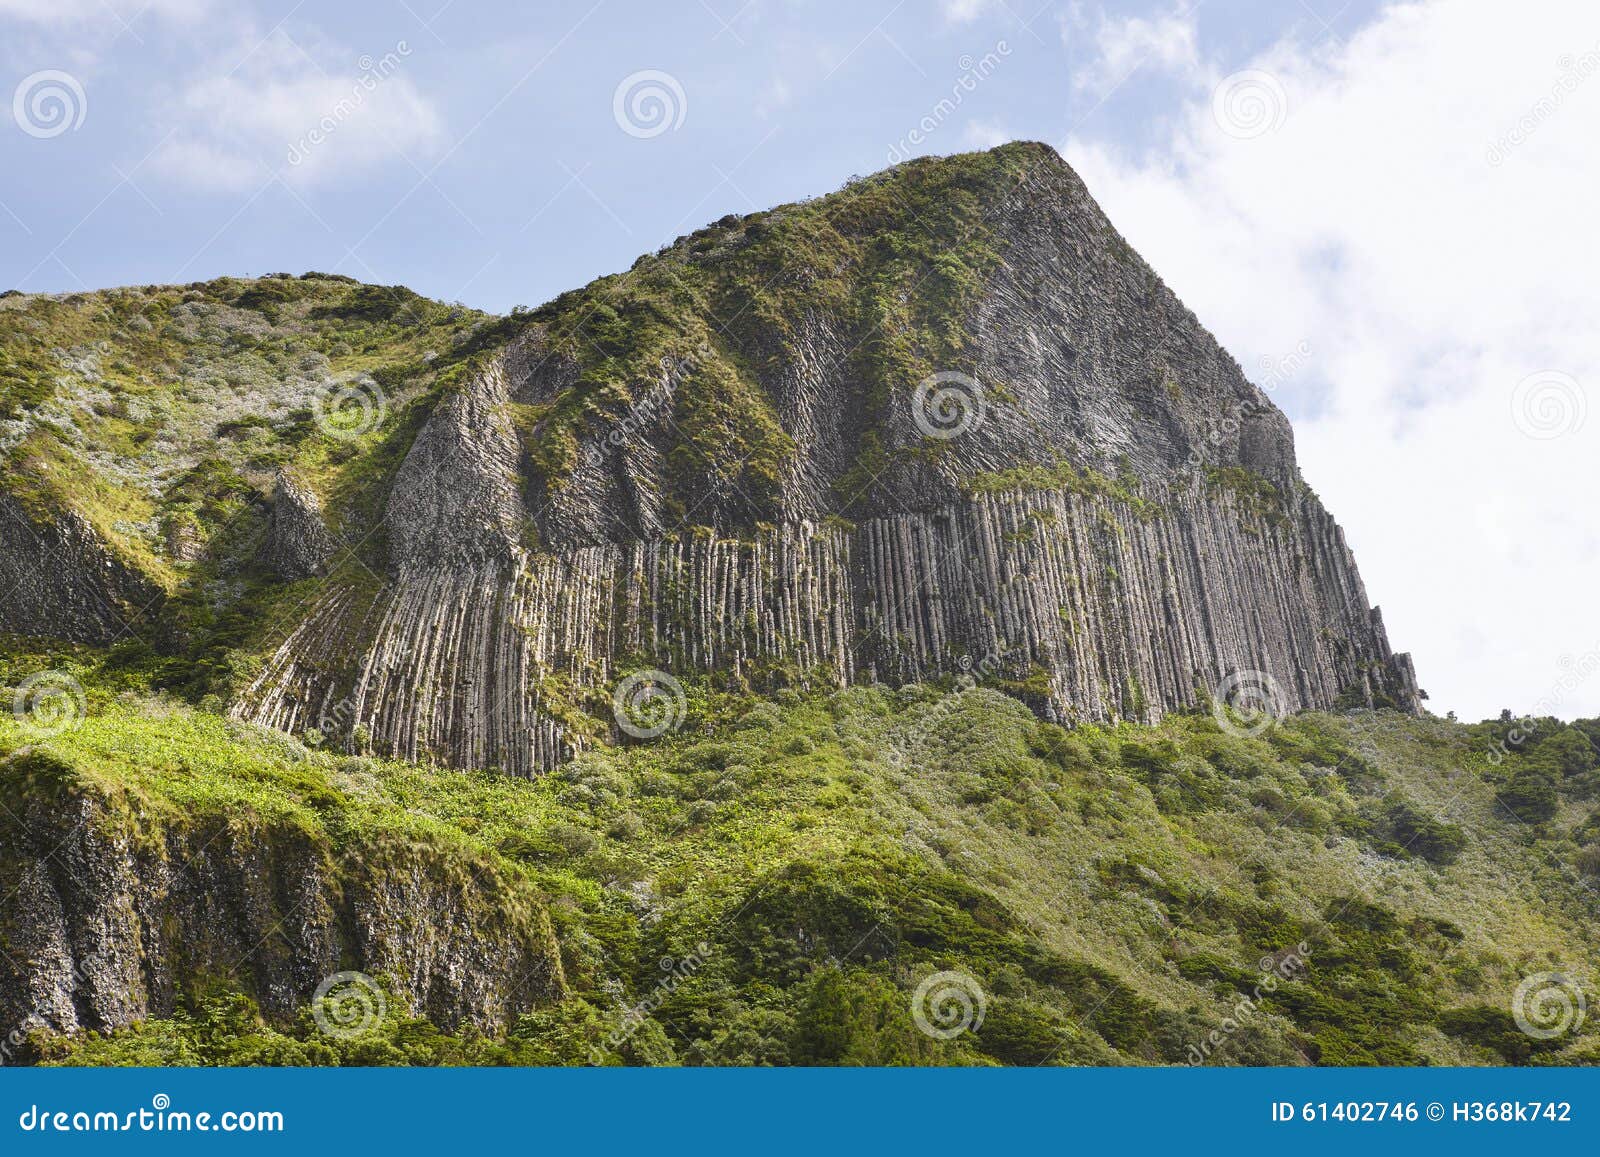 azores rocky landscape in flores island. rocha dos bordoes. port